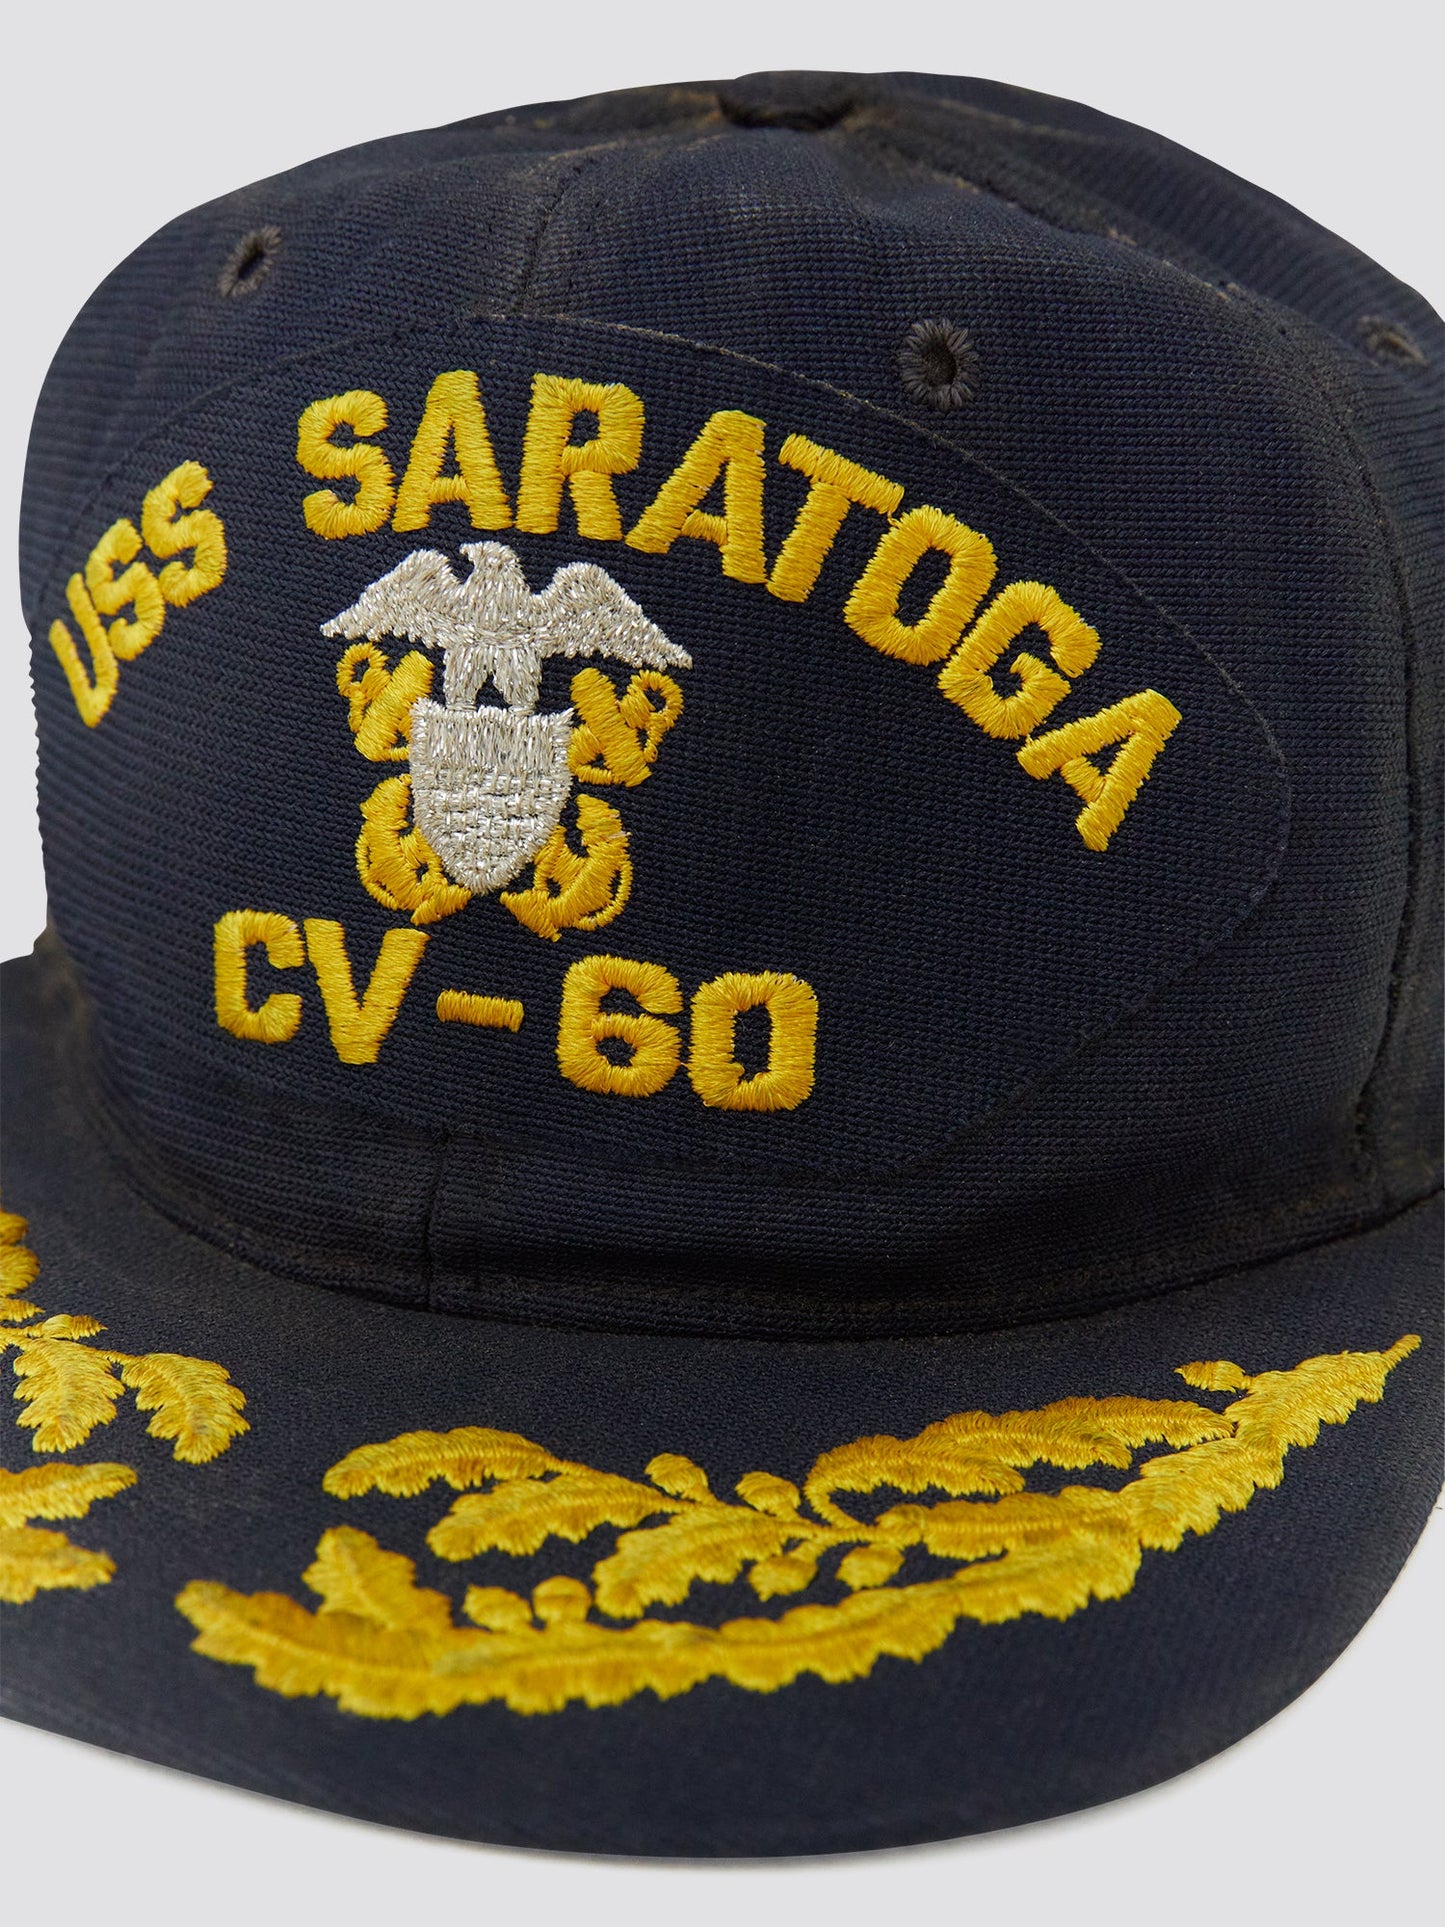 USS SARATOGA CAP ACCESSORY Alpha Industries, Inc. 